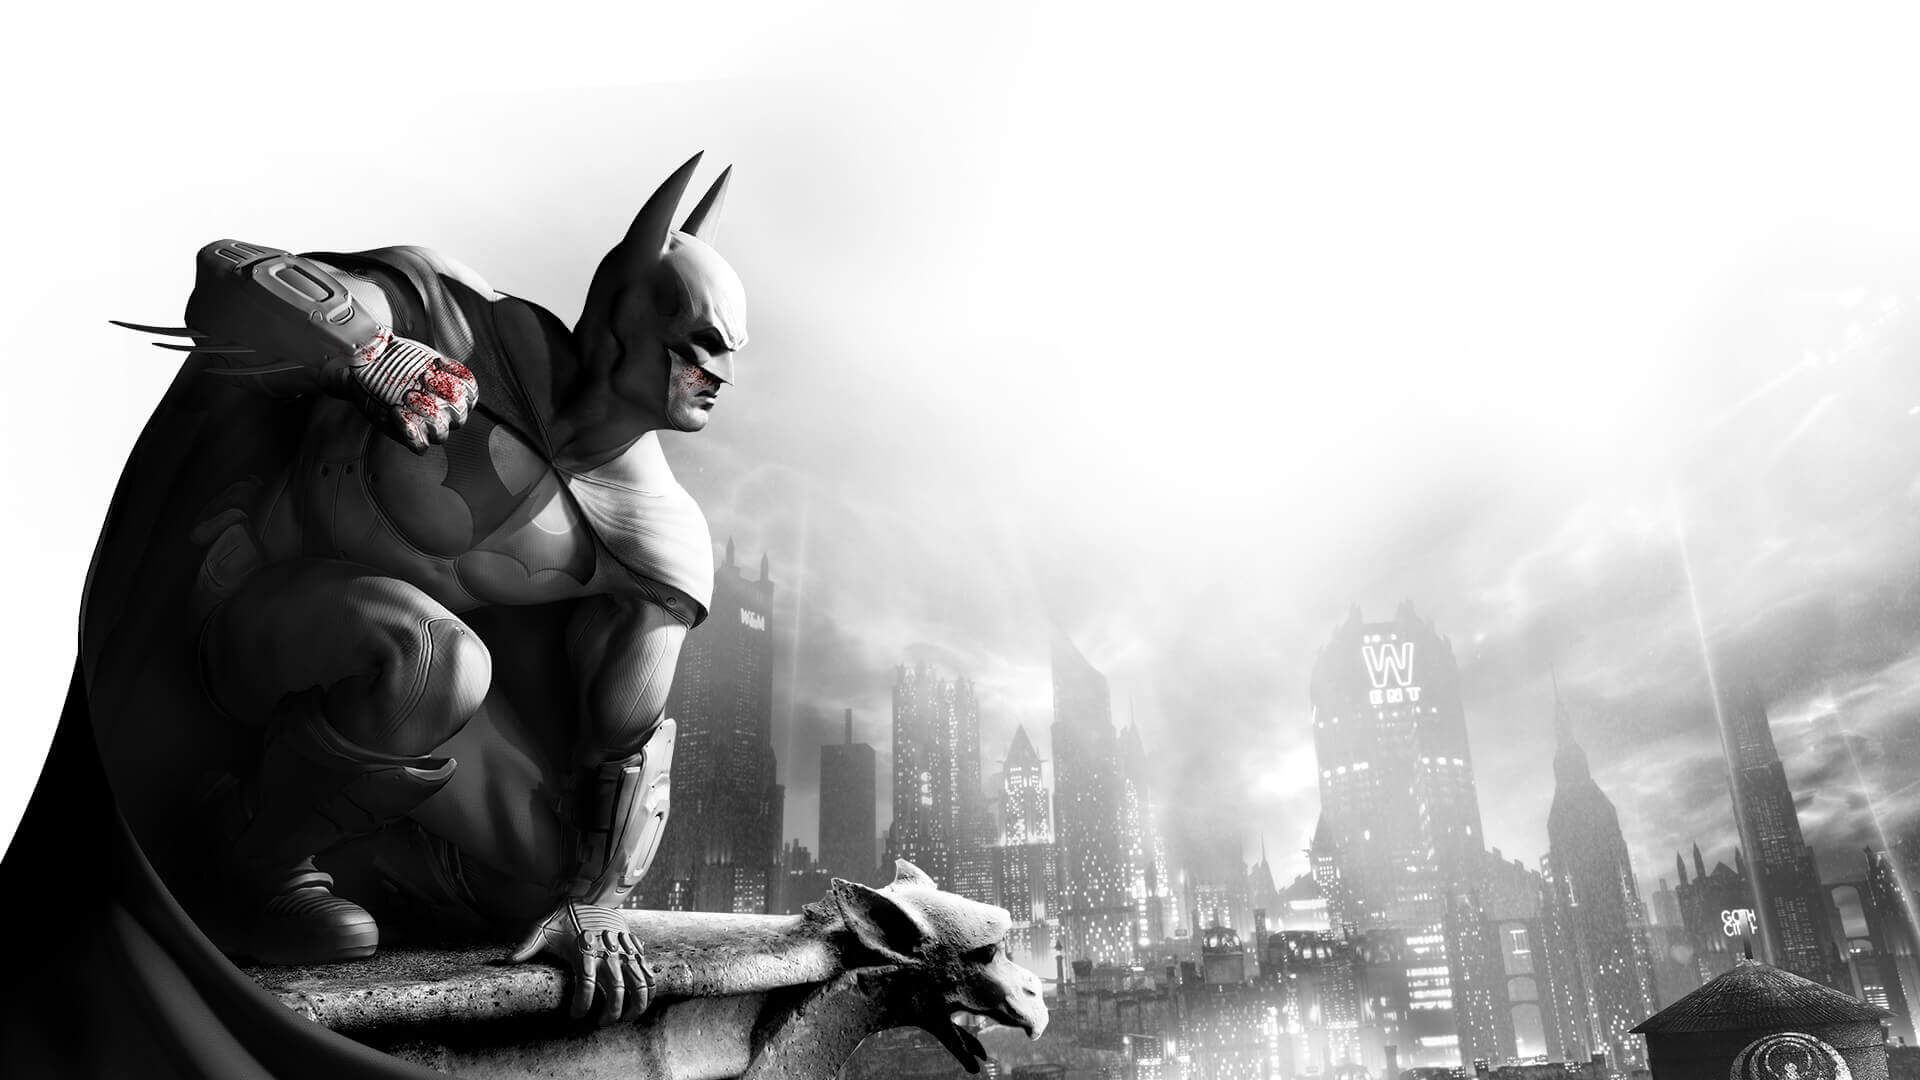 Cambiar las voces a Ingles y textos a Español Latino for Batman: Arkham City GOTY